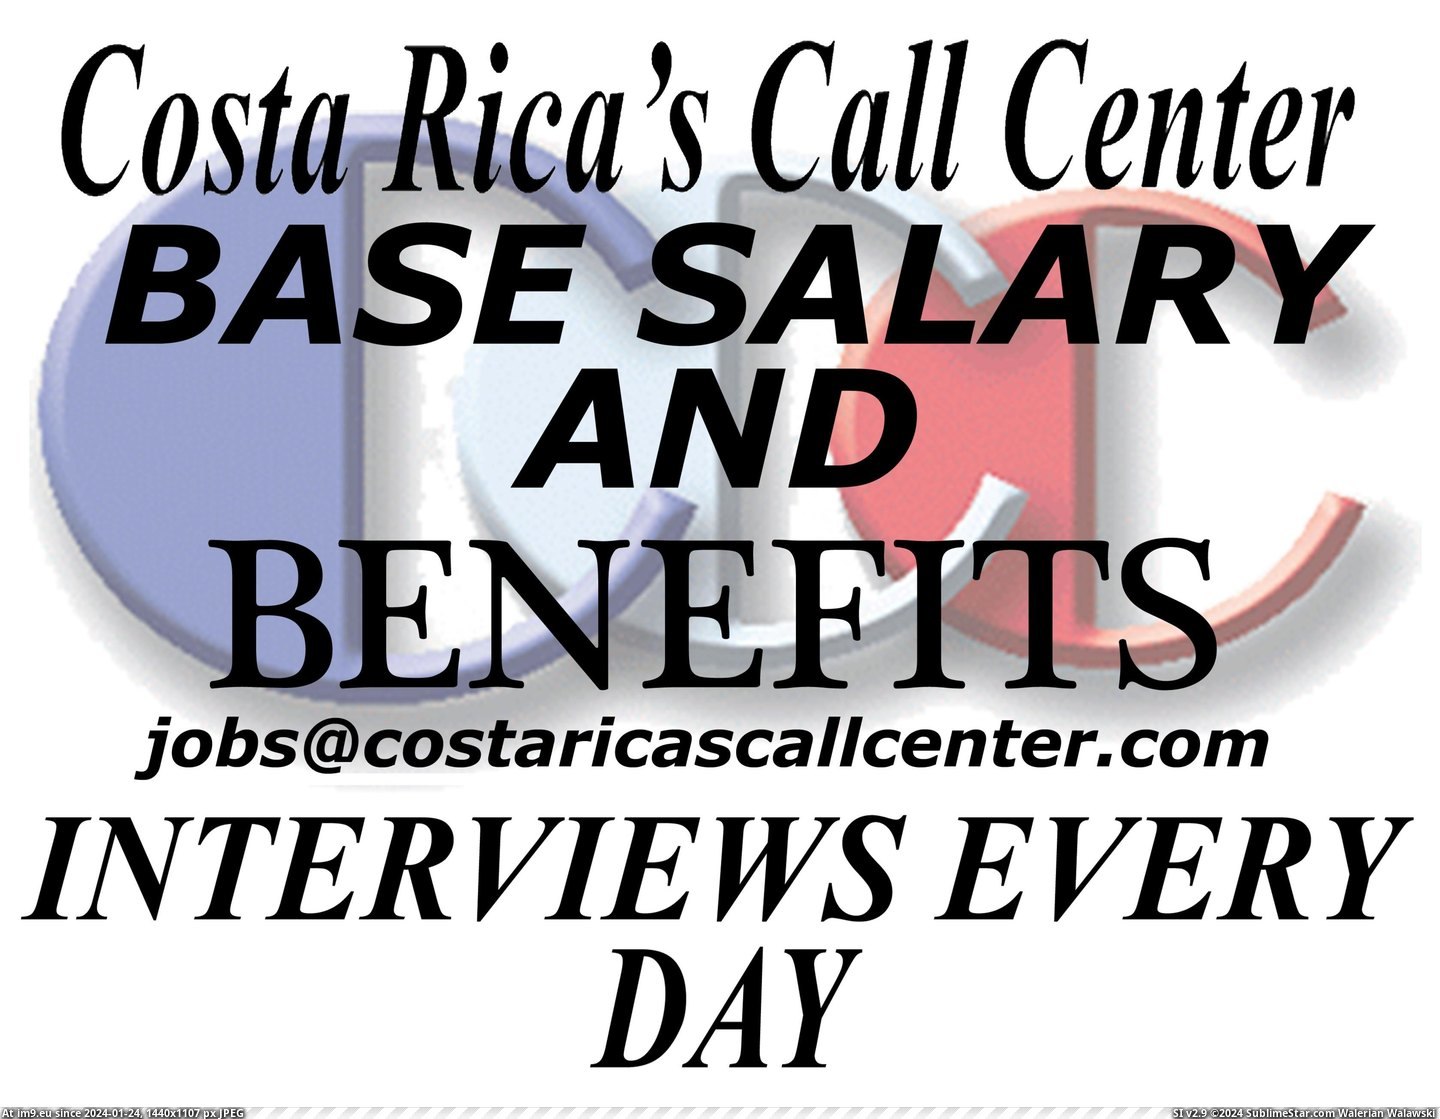 CCC SALARY AND BENEFITS JOB WORK (in COSTA RICA'S CALL CENTER TEN YEAR ANNIVERSARY)